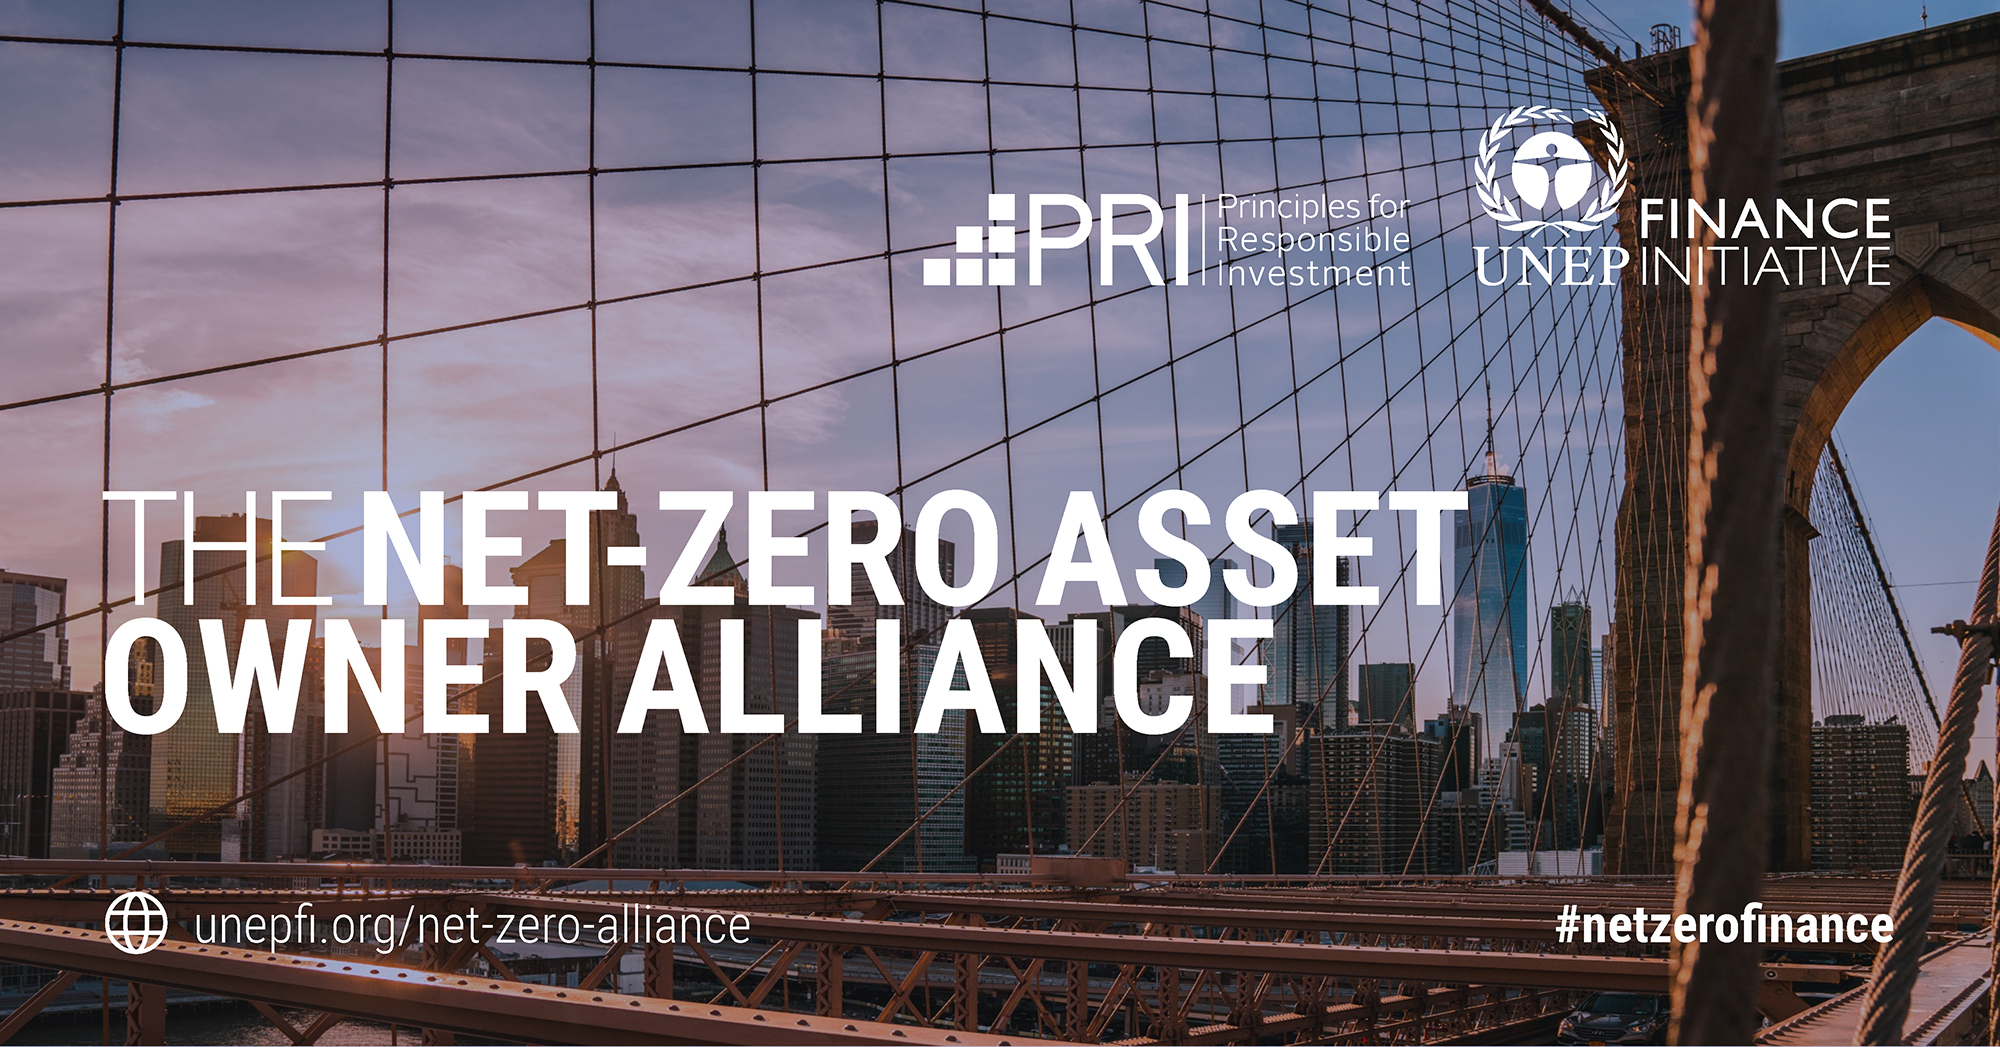 Allianz net-zero asset owner alliance